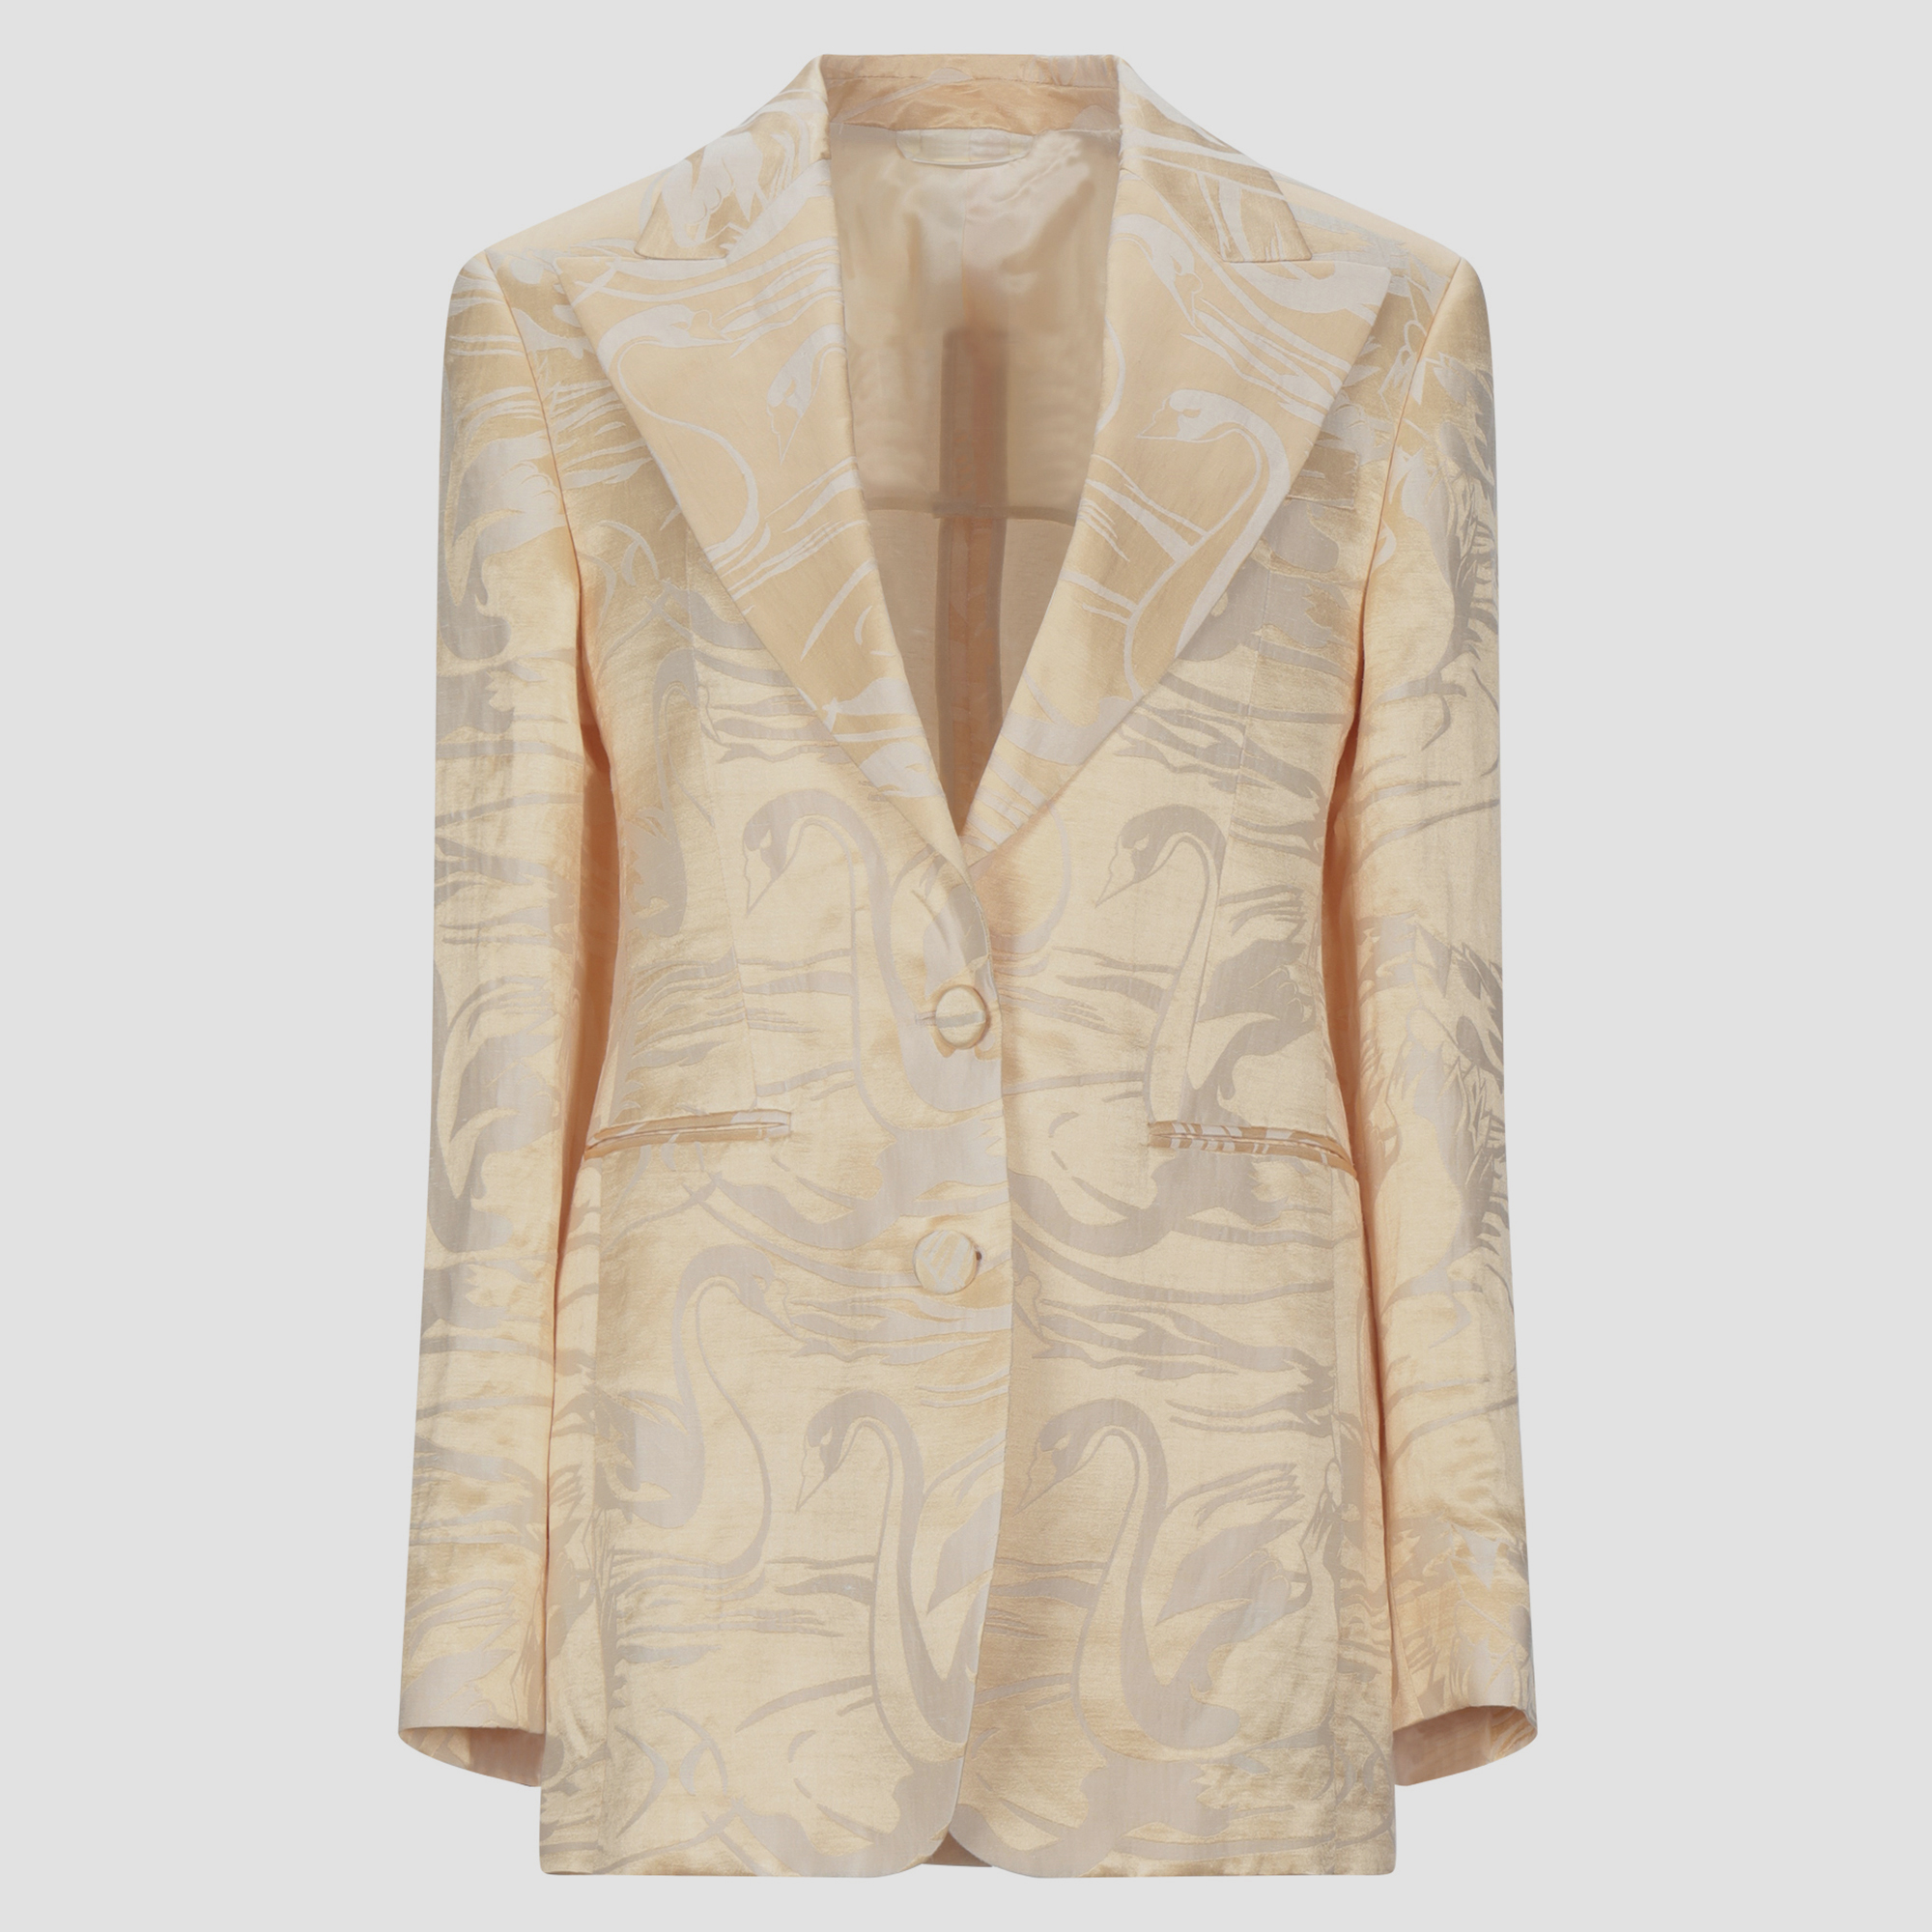 Acne studios beige/yellow patterned linen-blend blazer s (eu 36)